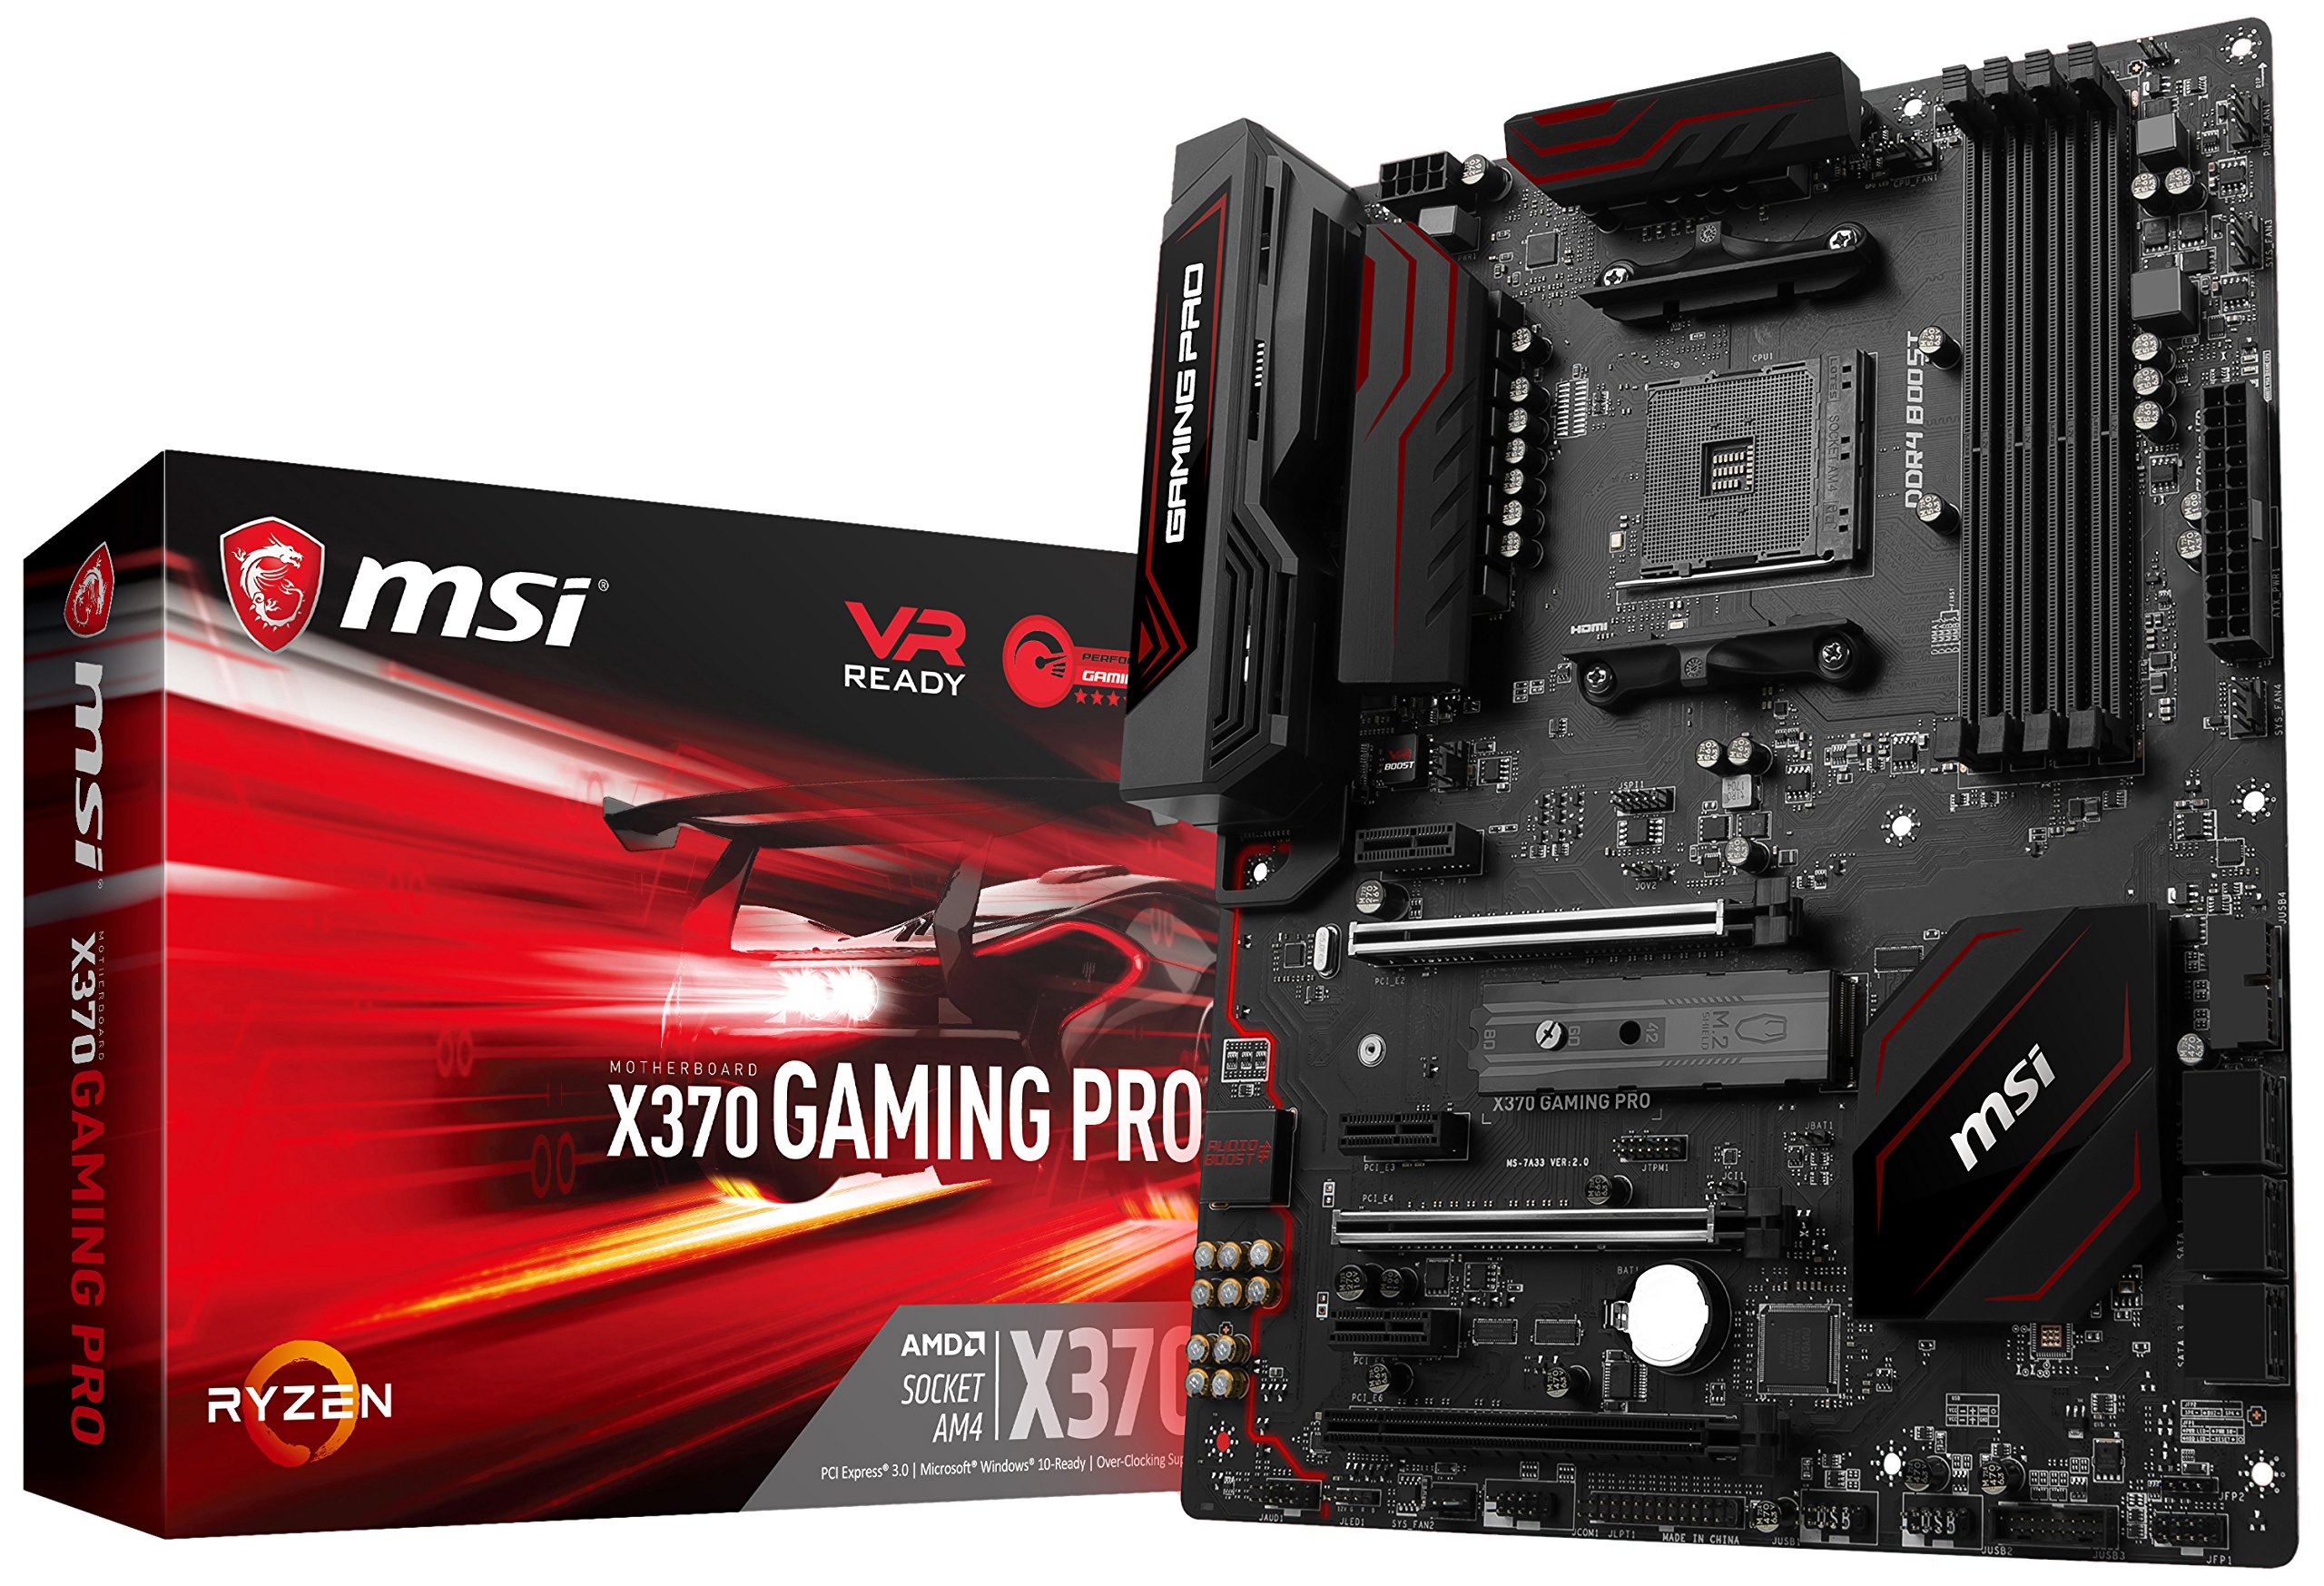 MSI Gaming AMD Ryzen X370 DDR4 VR Ready HDMI USB 3 SLI CFX ATX Motherboard (X370 GAMING PRO)